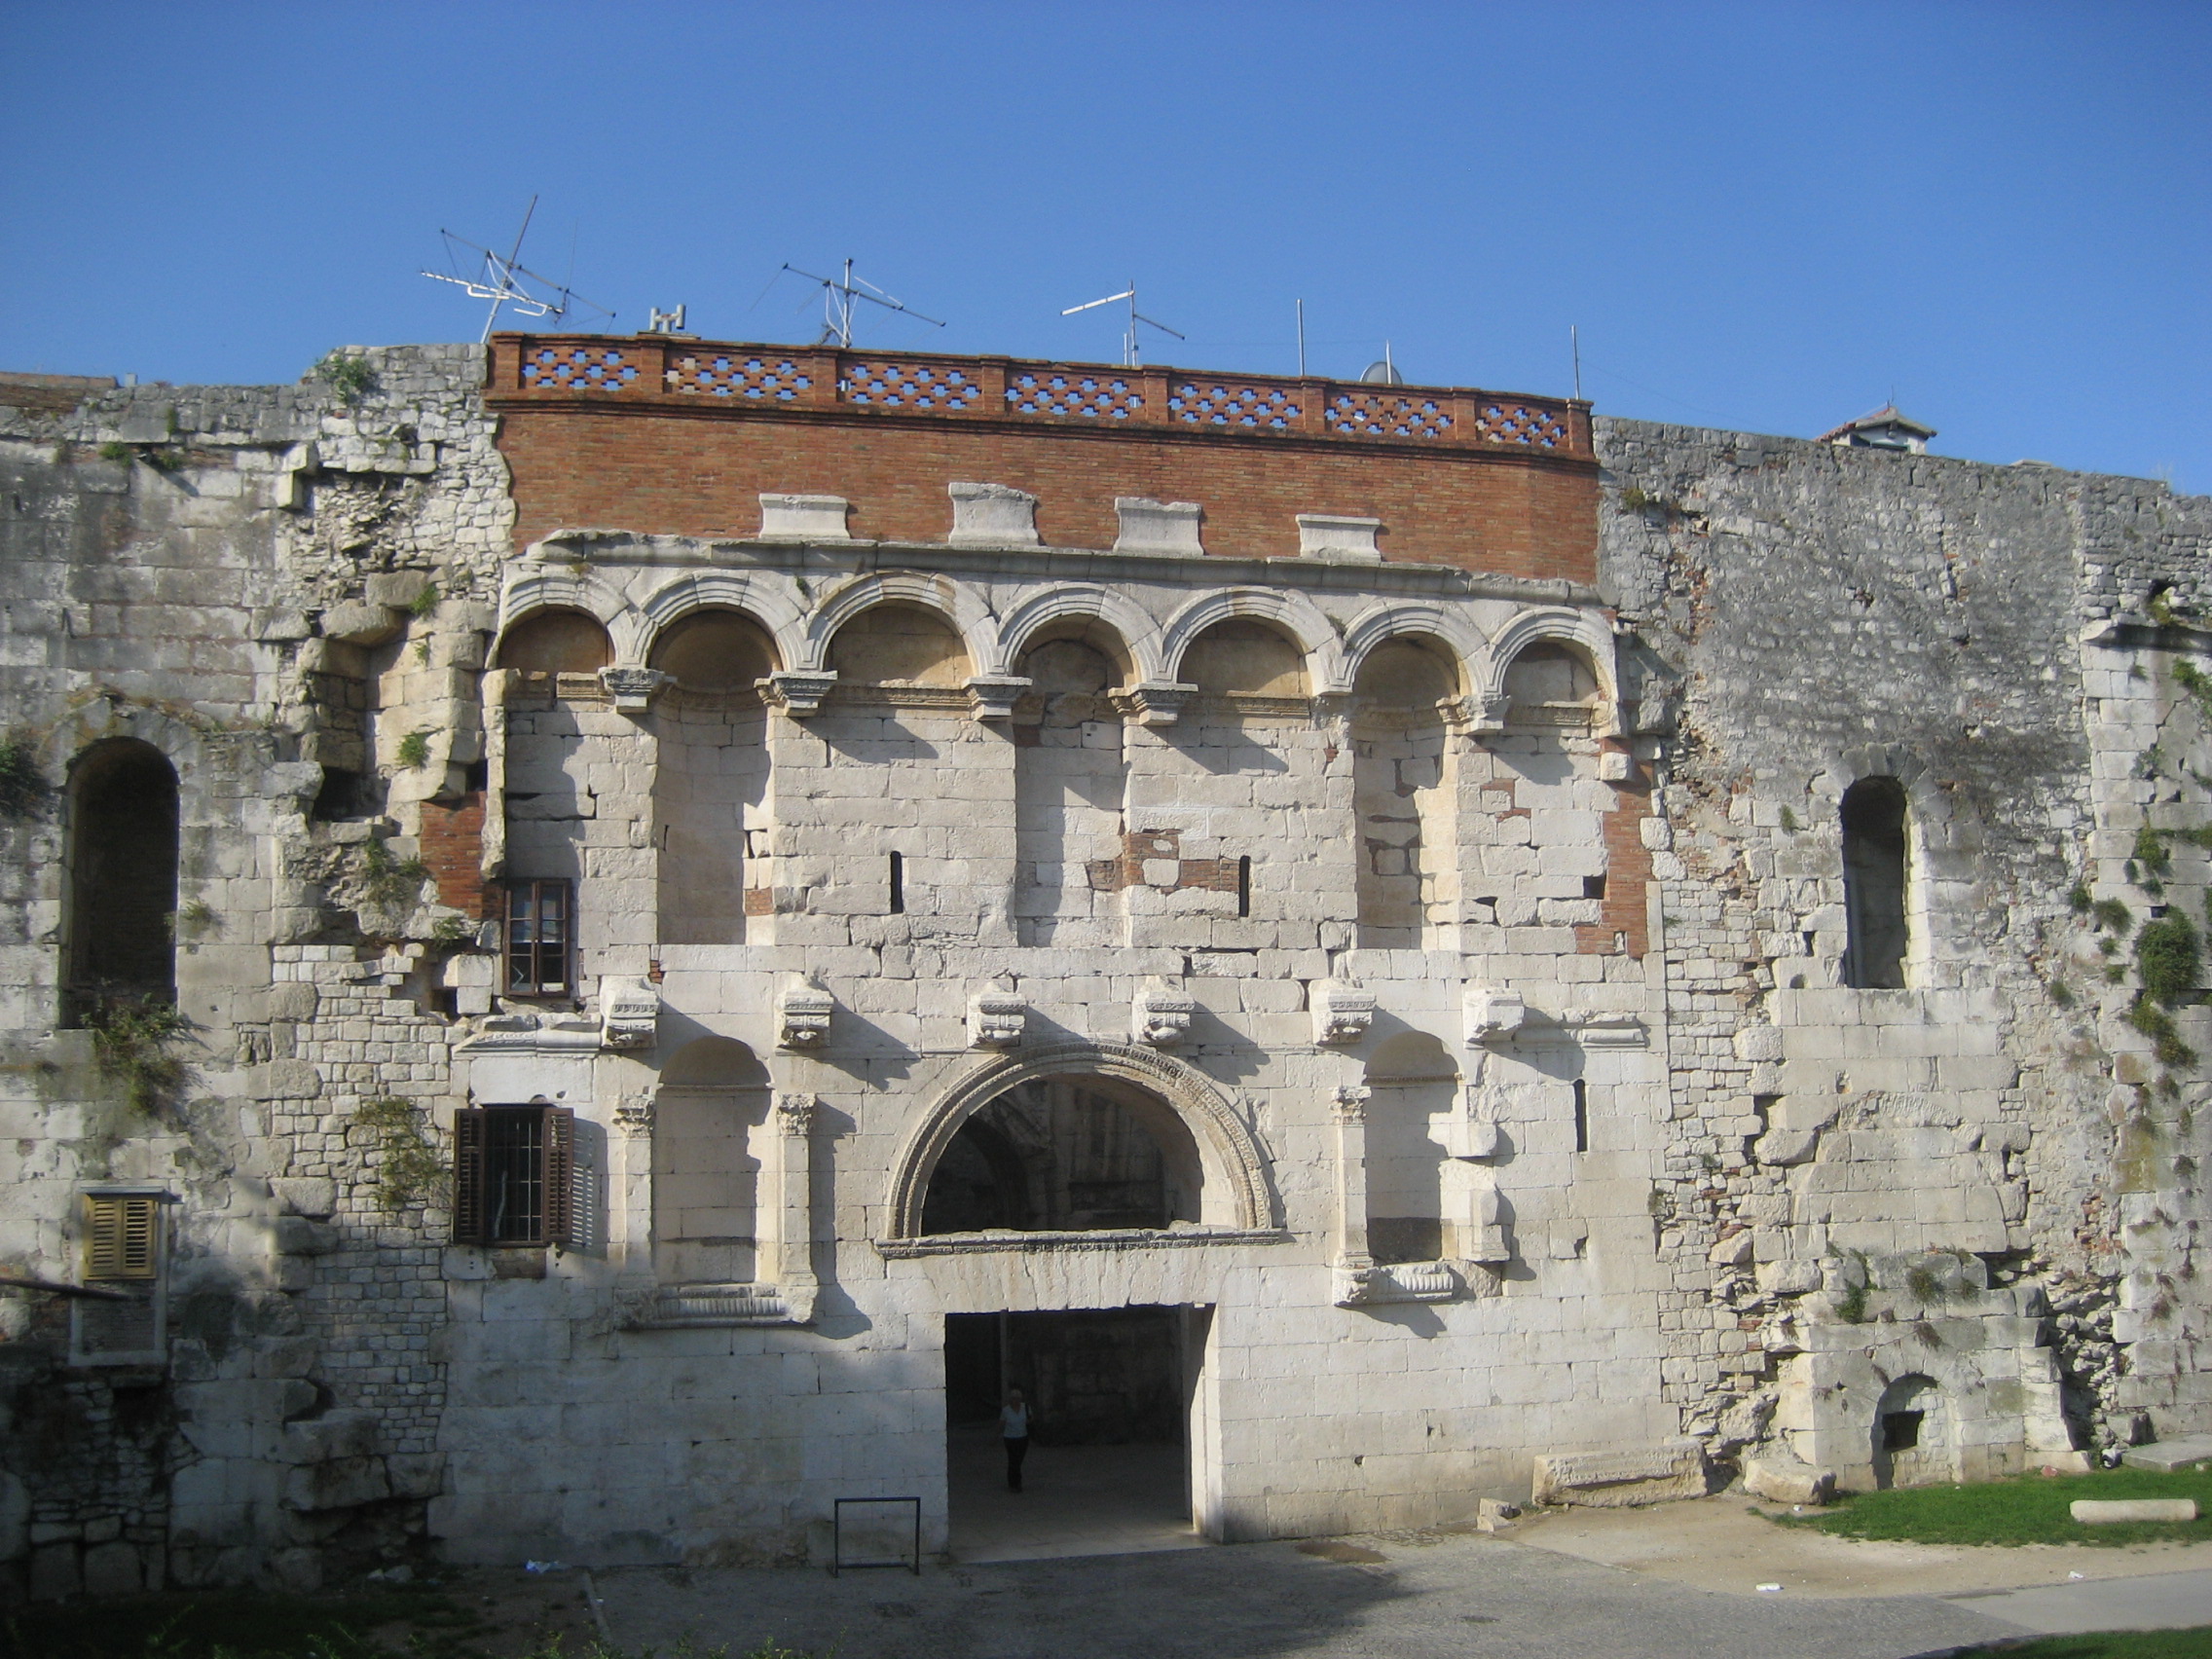 Дворец Диоклетиана